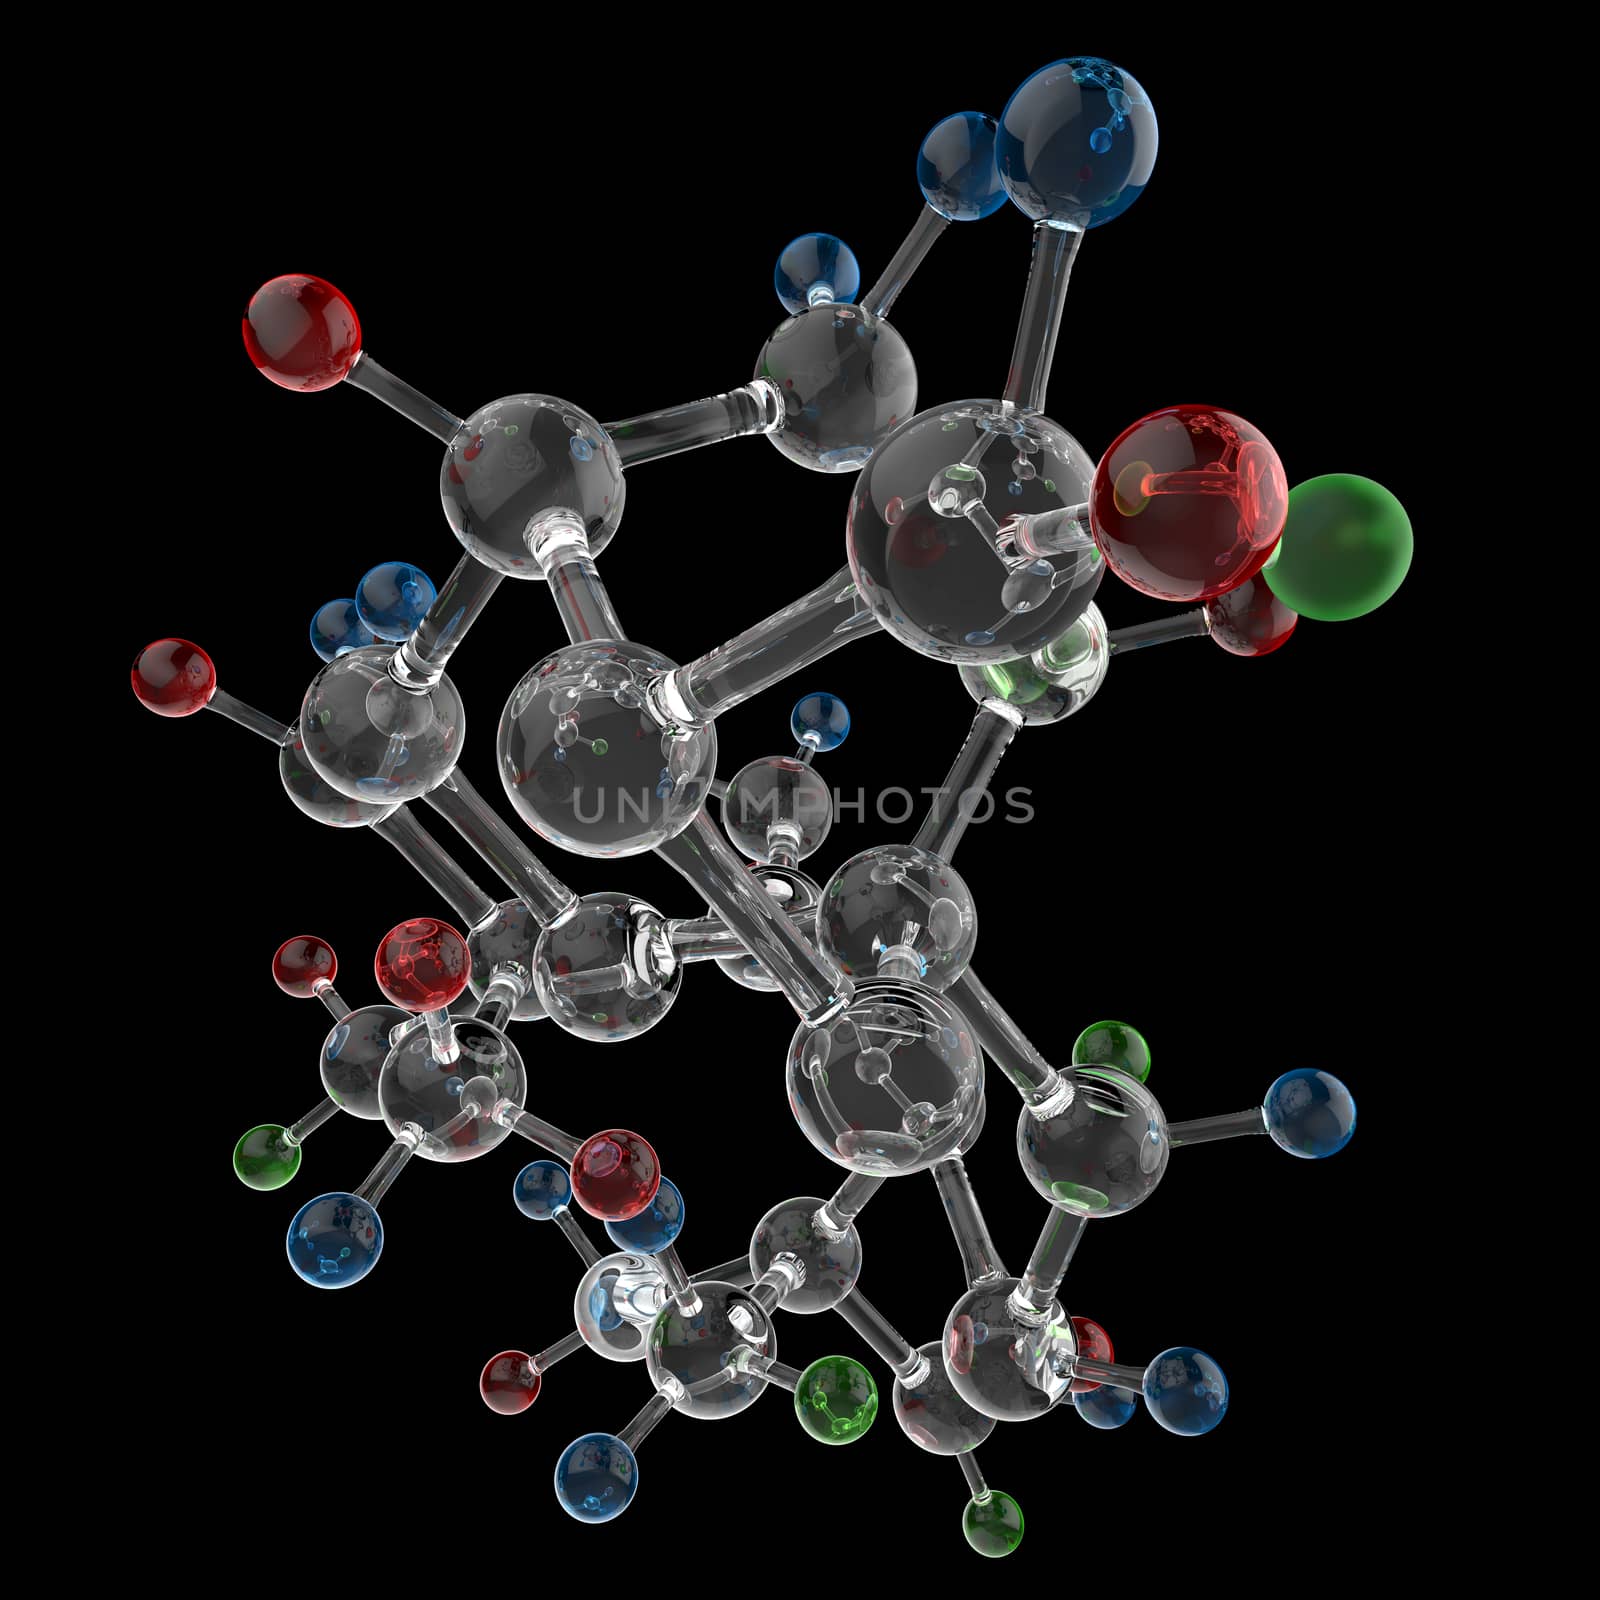 Molecule 3d on black background